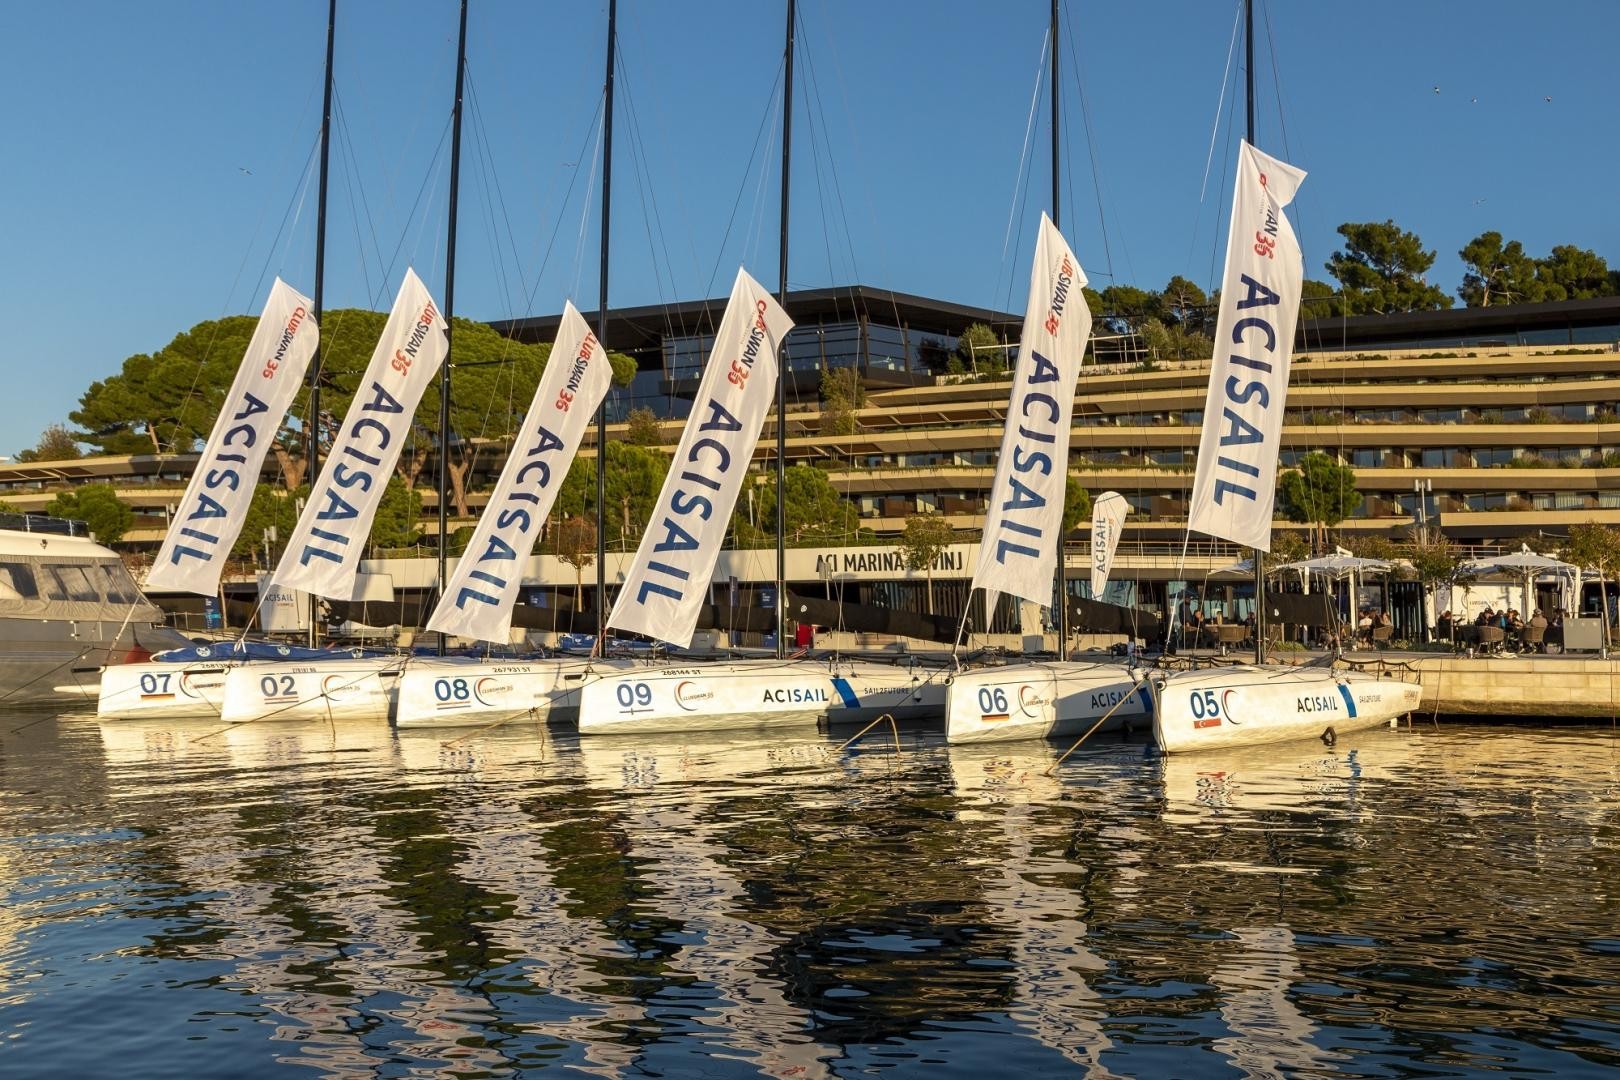 Rovinj makes history: First ever ClubSwan 36 regatta held in Croatia